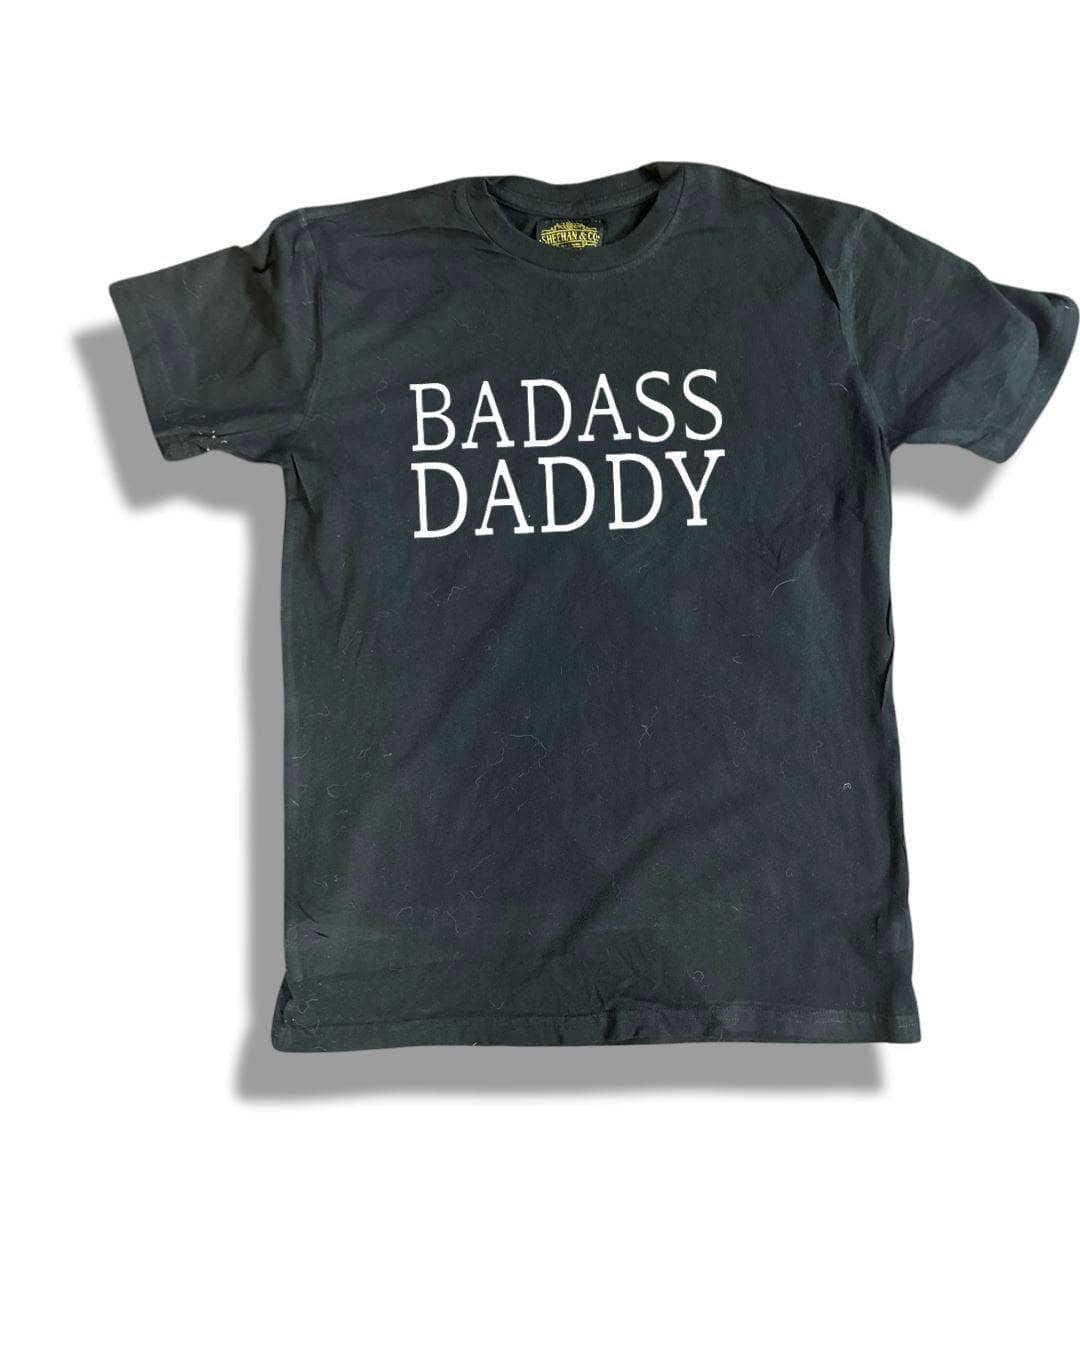 Badass Daddy Basic Crew by Sheehan - Sheehan and Co.